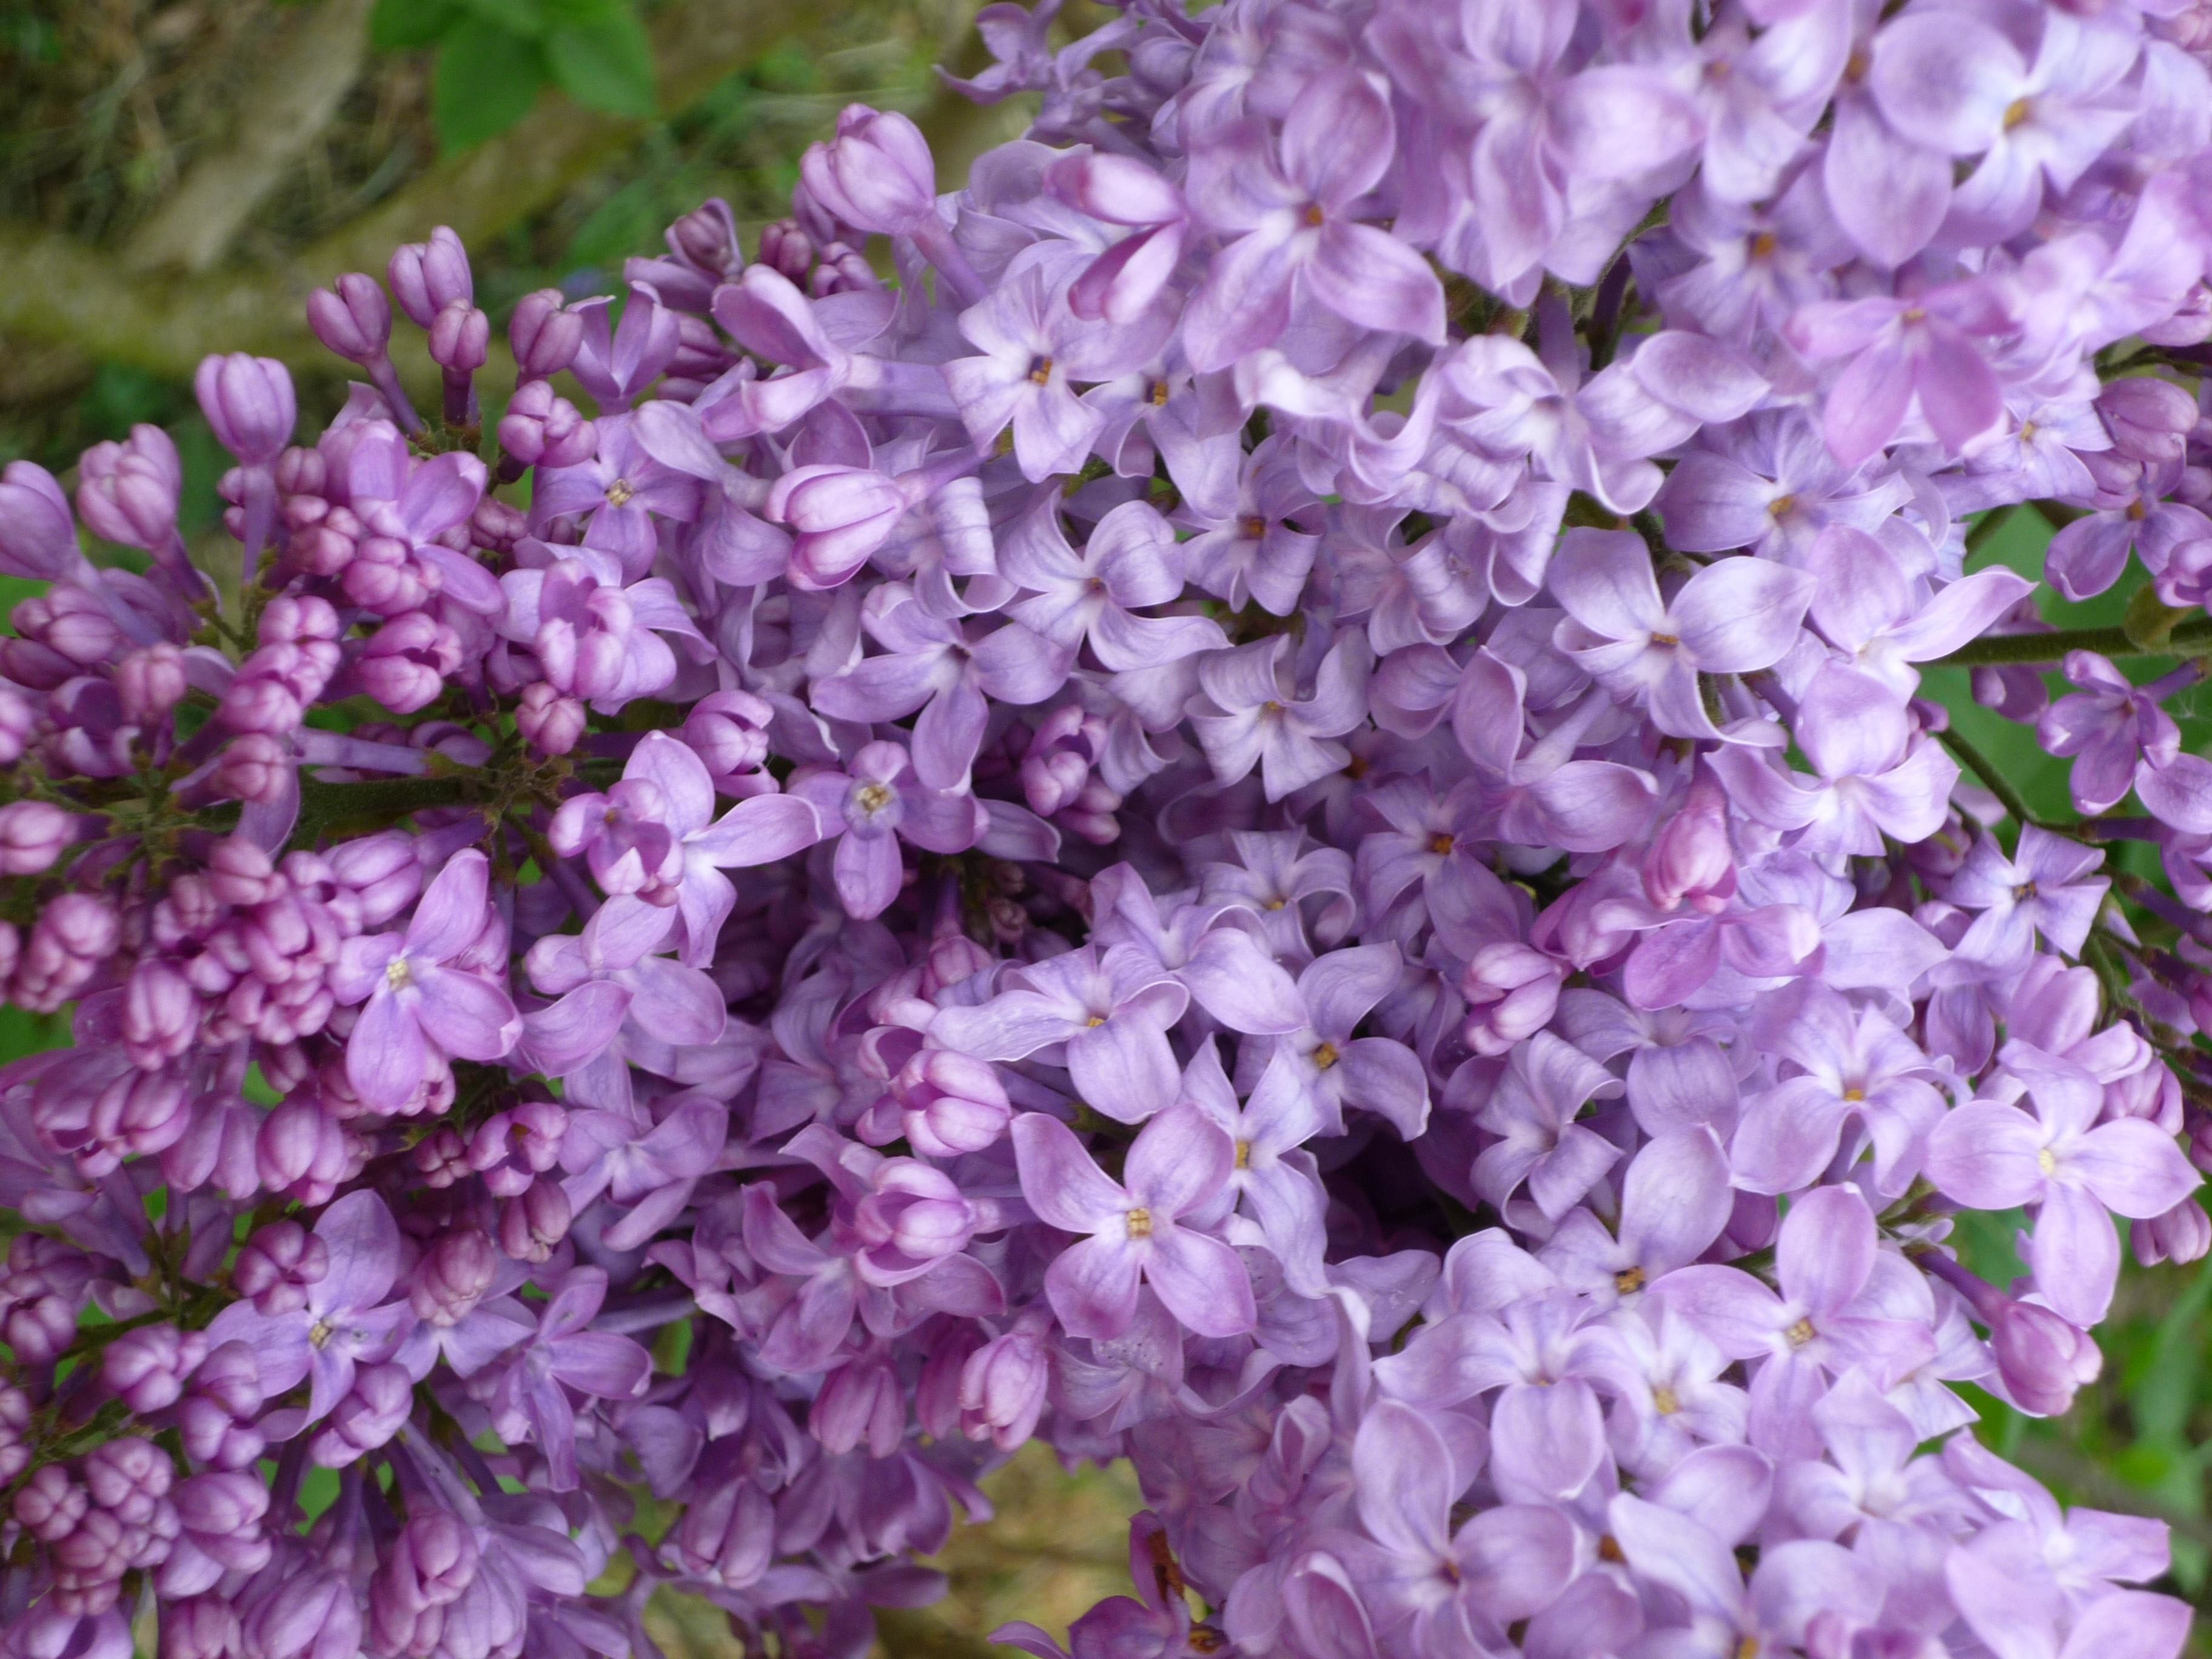 Syringa vulgaris "Lavender Lady"